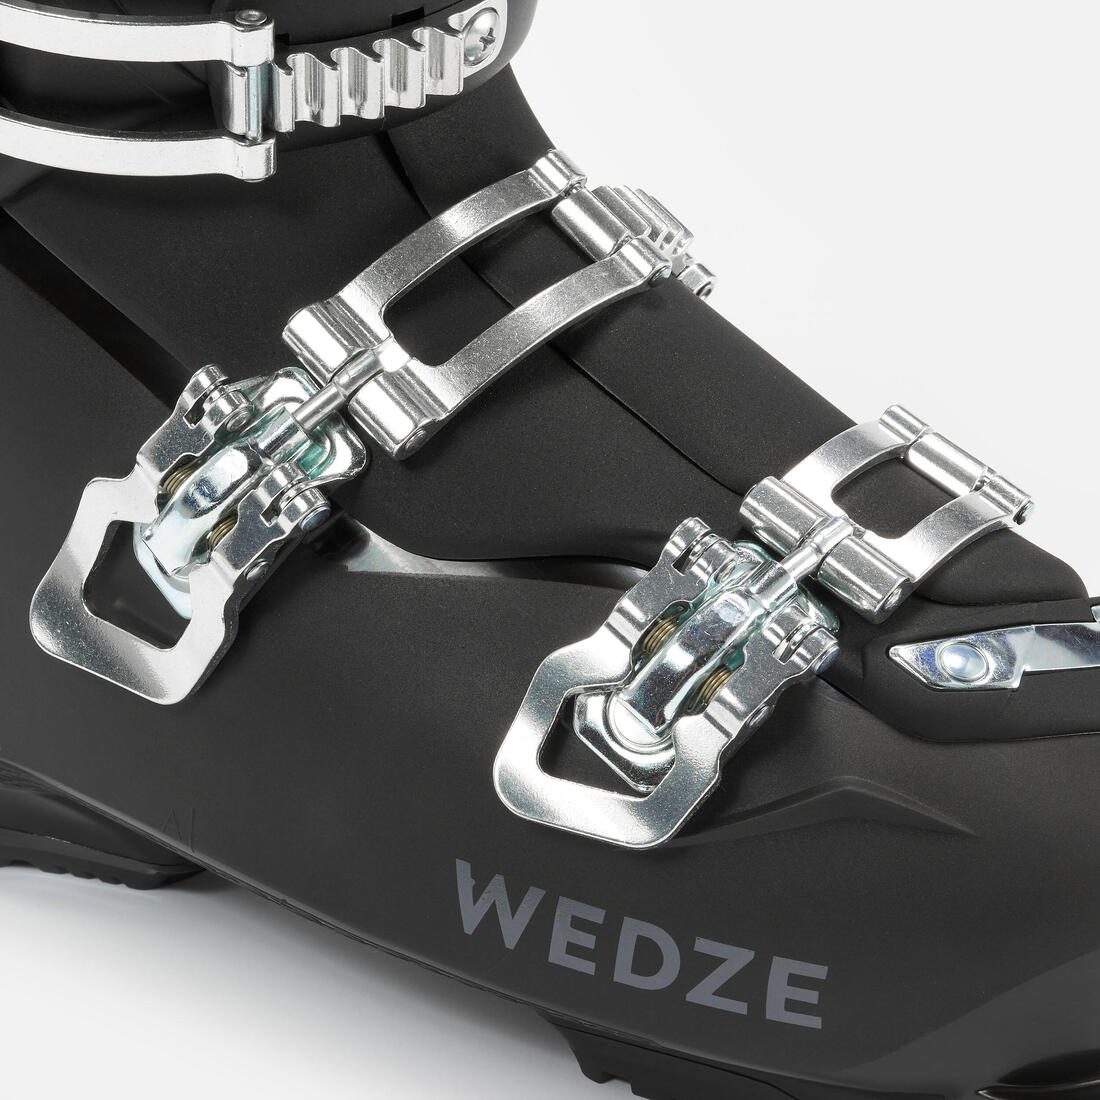 WED'ZE(ウェッゼ) スキー ブーツ 500 メンズ